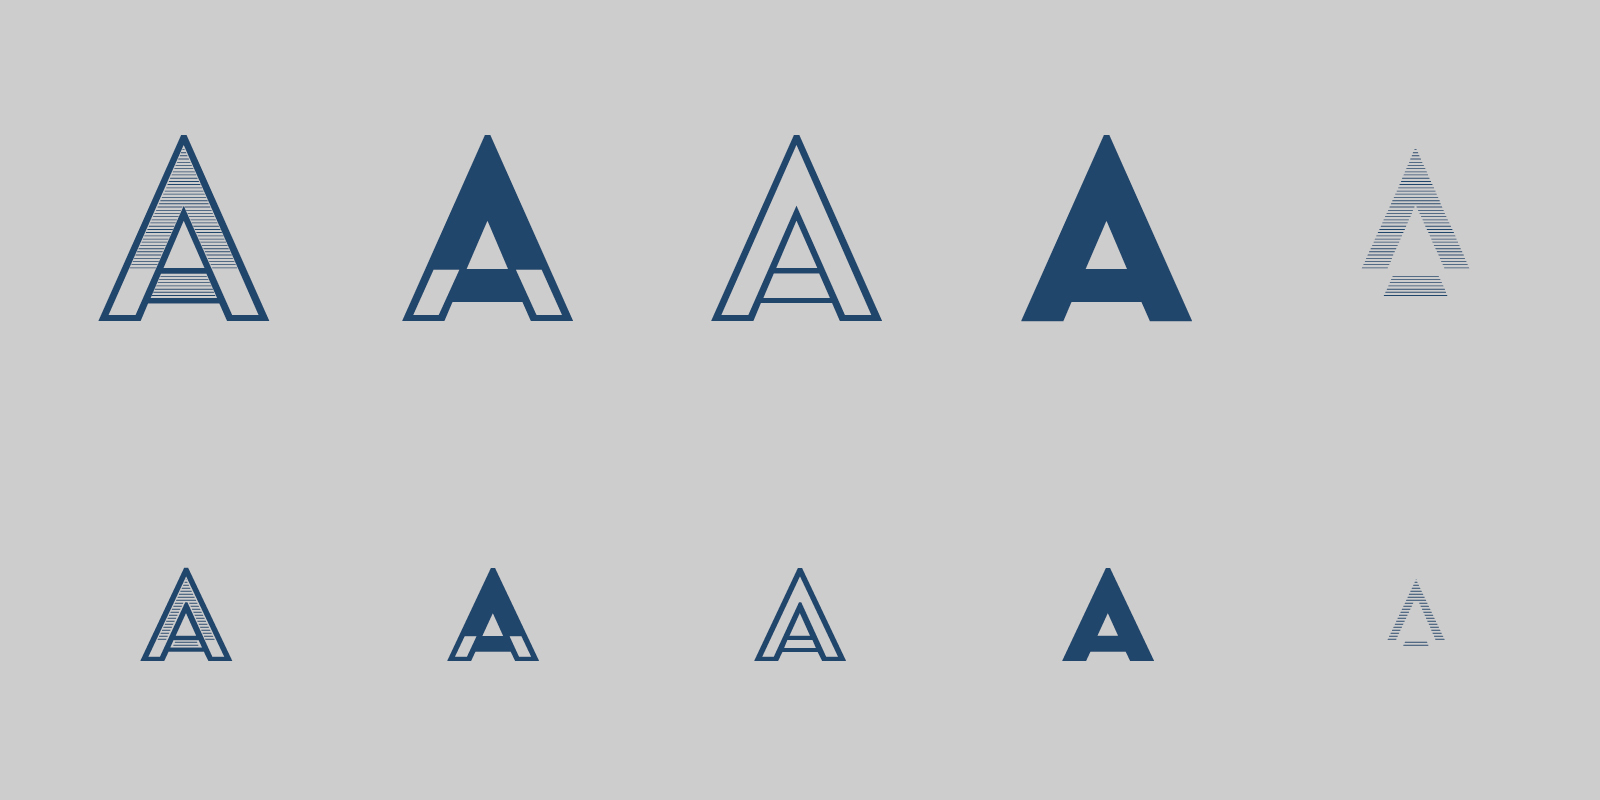 Card displaying Acier BAT typeface in various styles